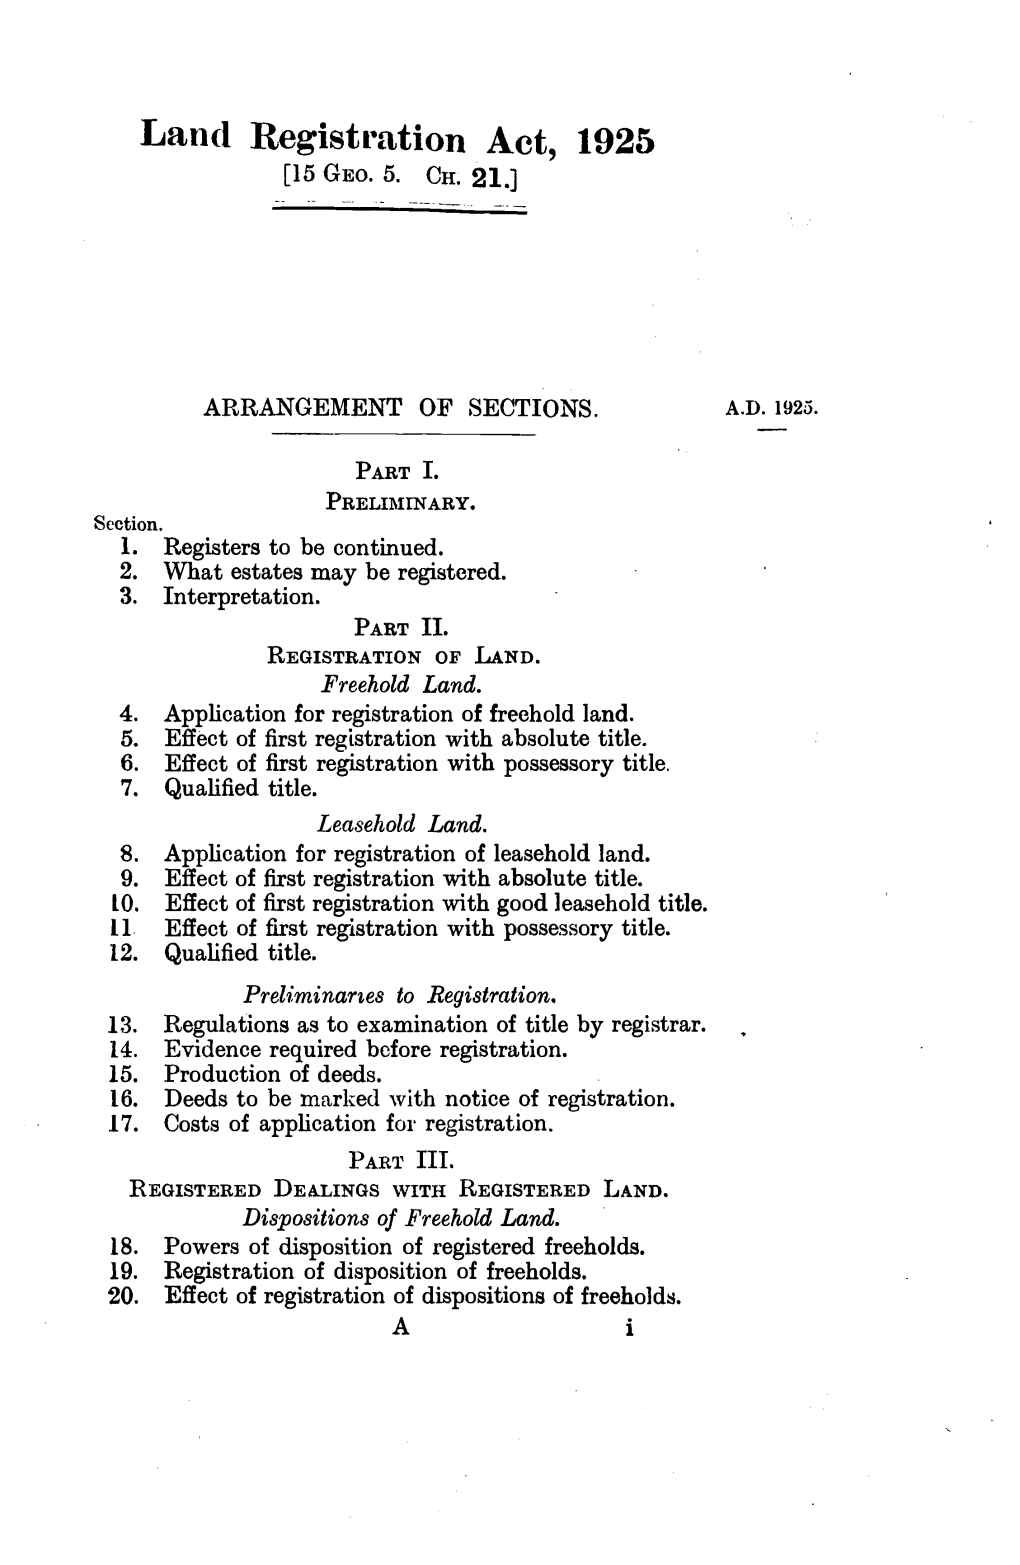 Land Registration Act, 1925 [15 GEO